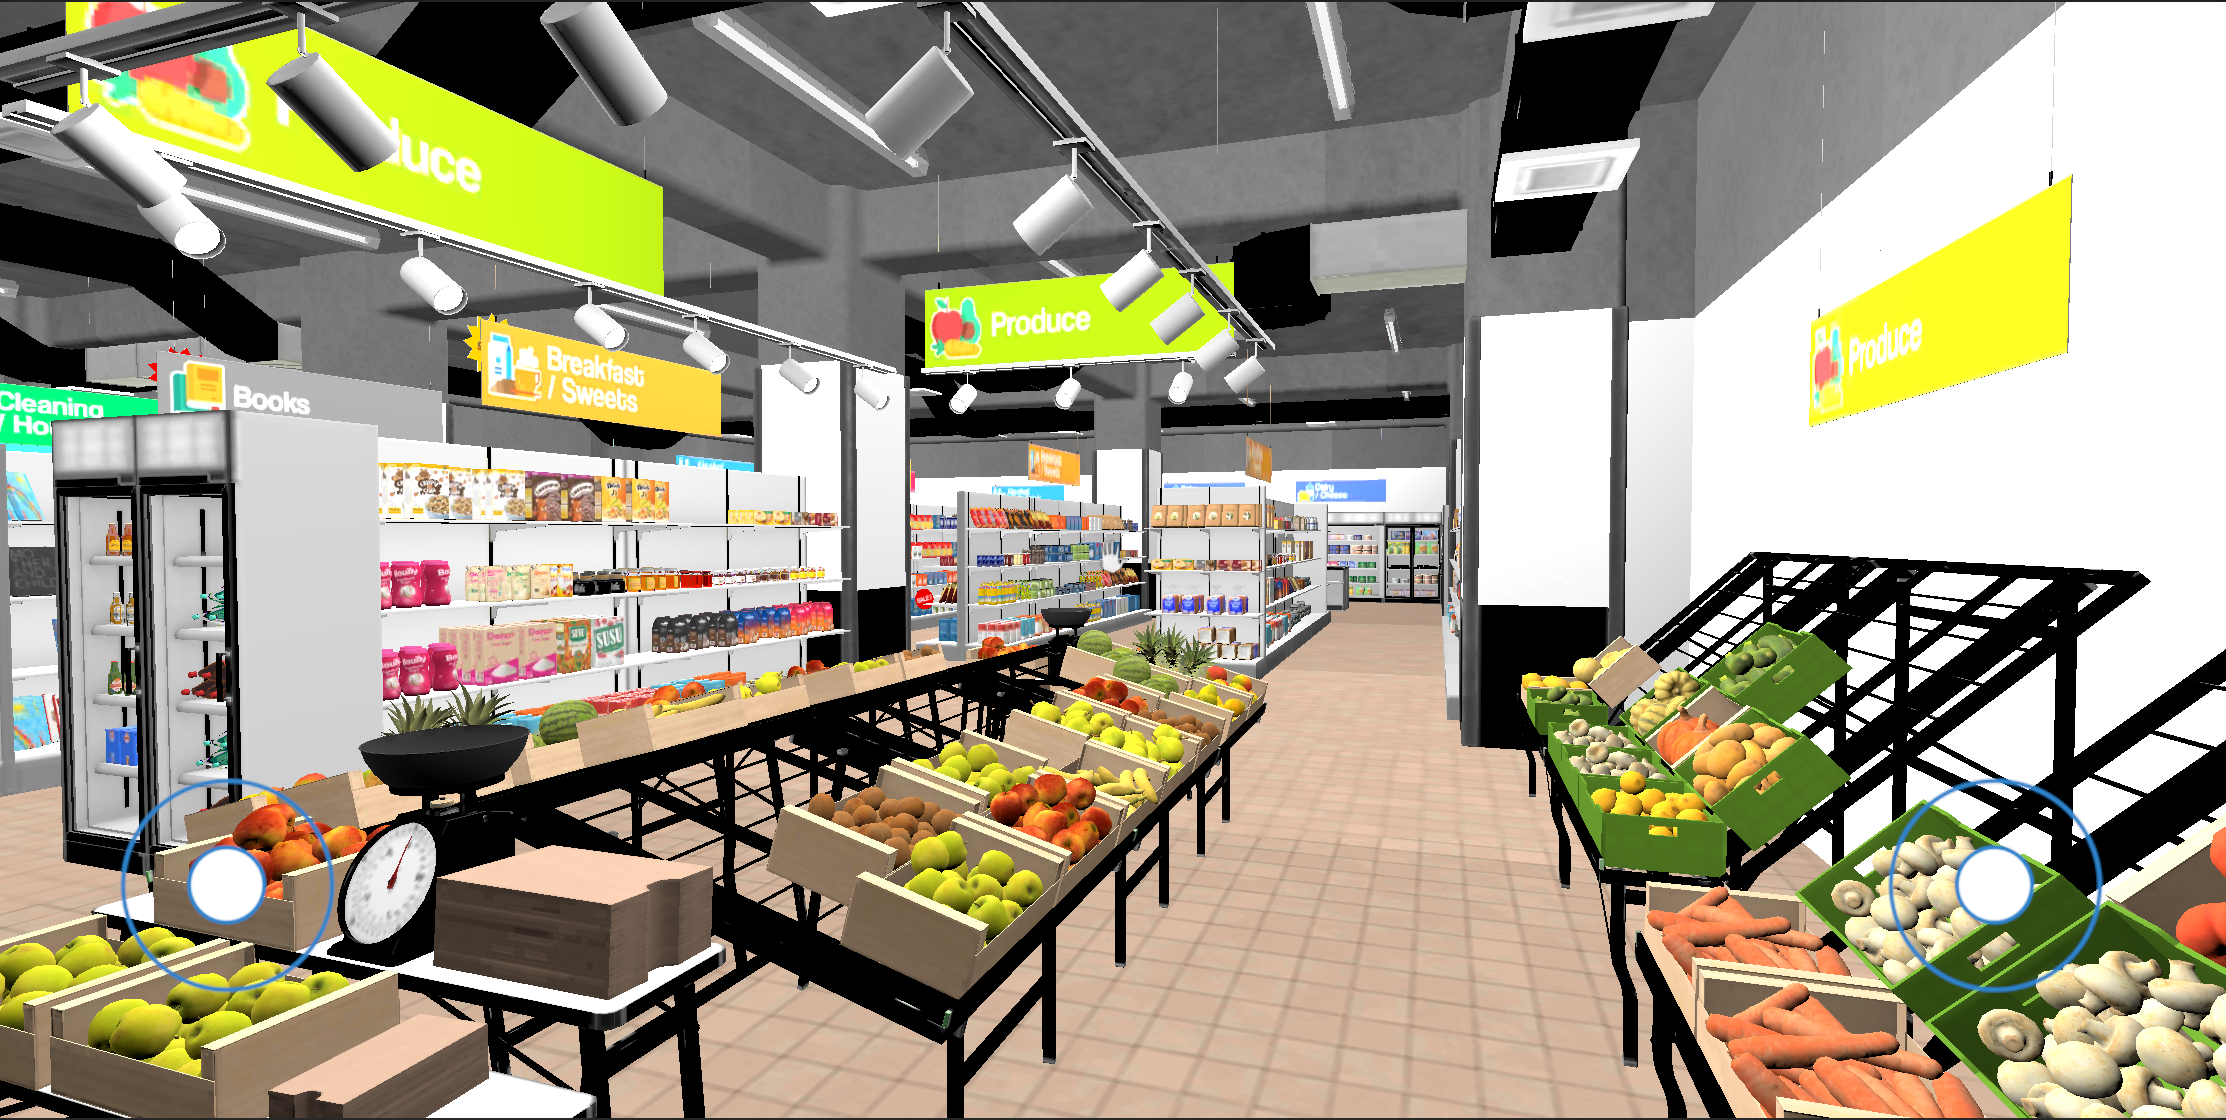 Supermarket Sim 3Dのキャプチャ